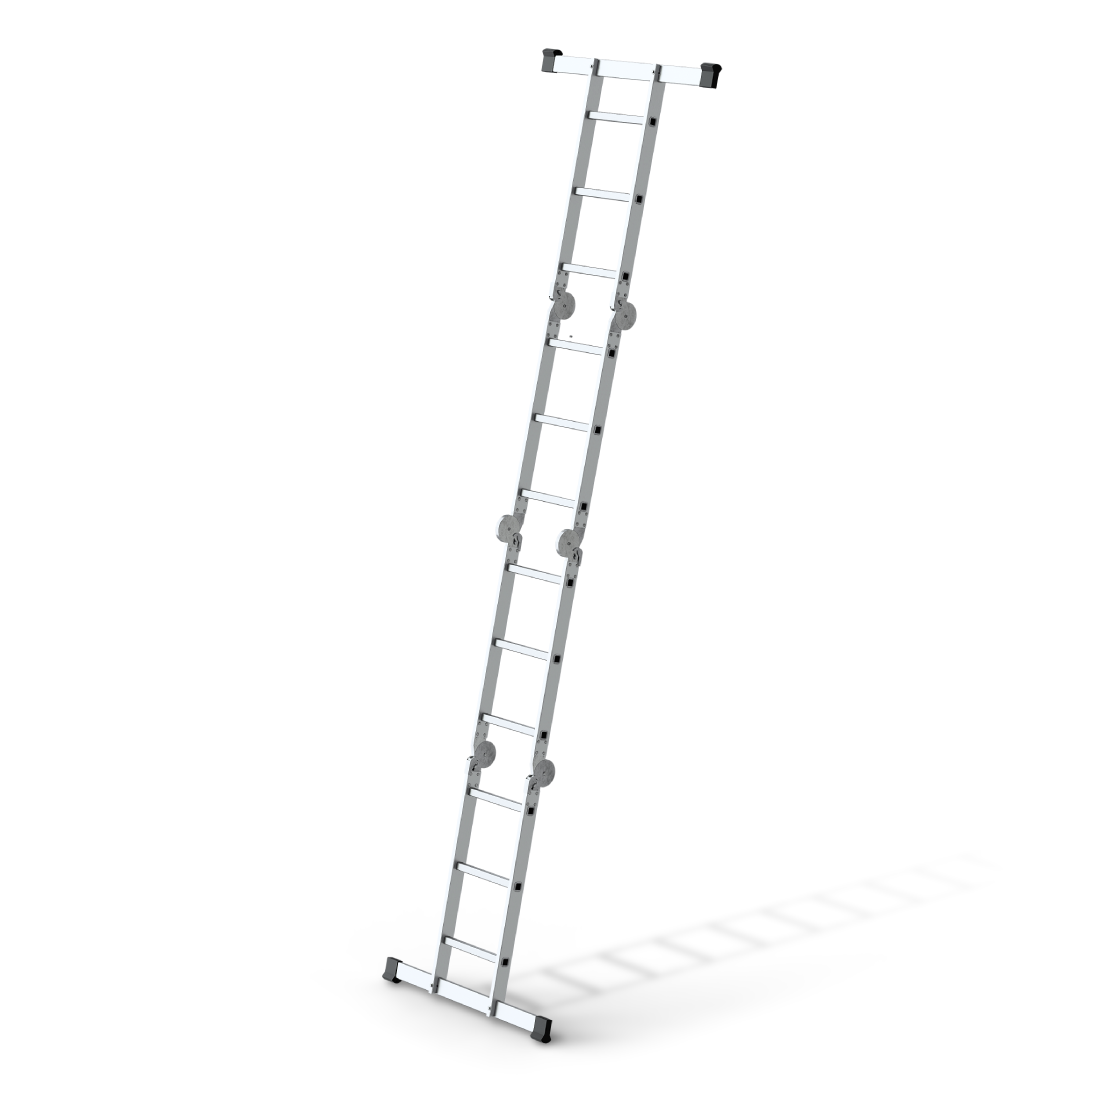 Escalera articulada de aluminio Reach Astra Pro tipo IA de 14 pies con plataforma - 330 lbs. Capacidad de carga